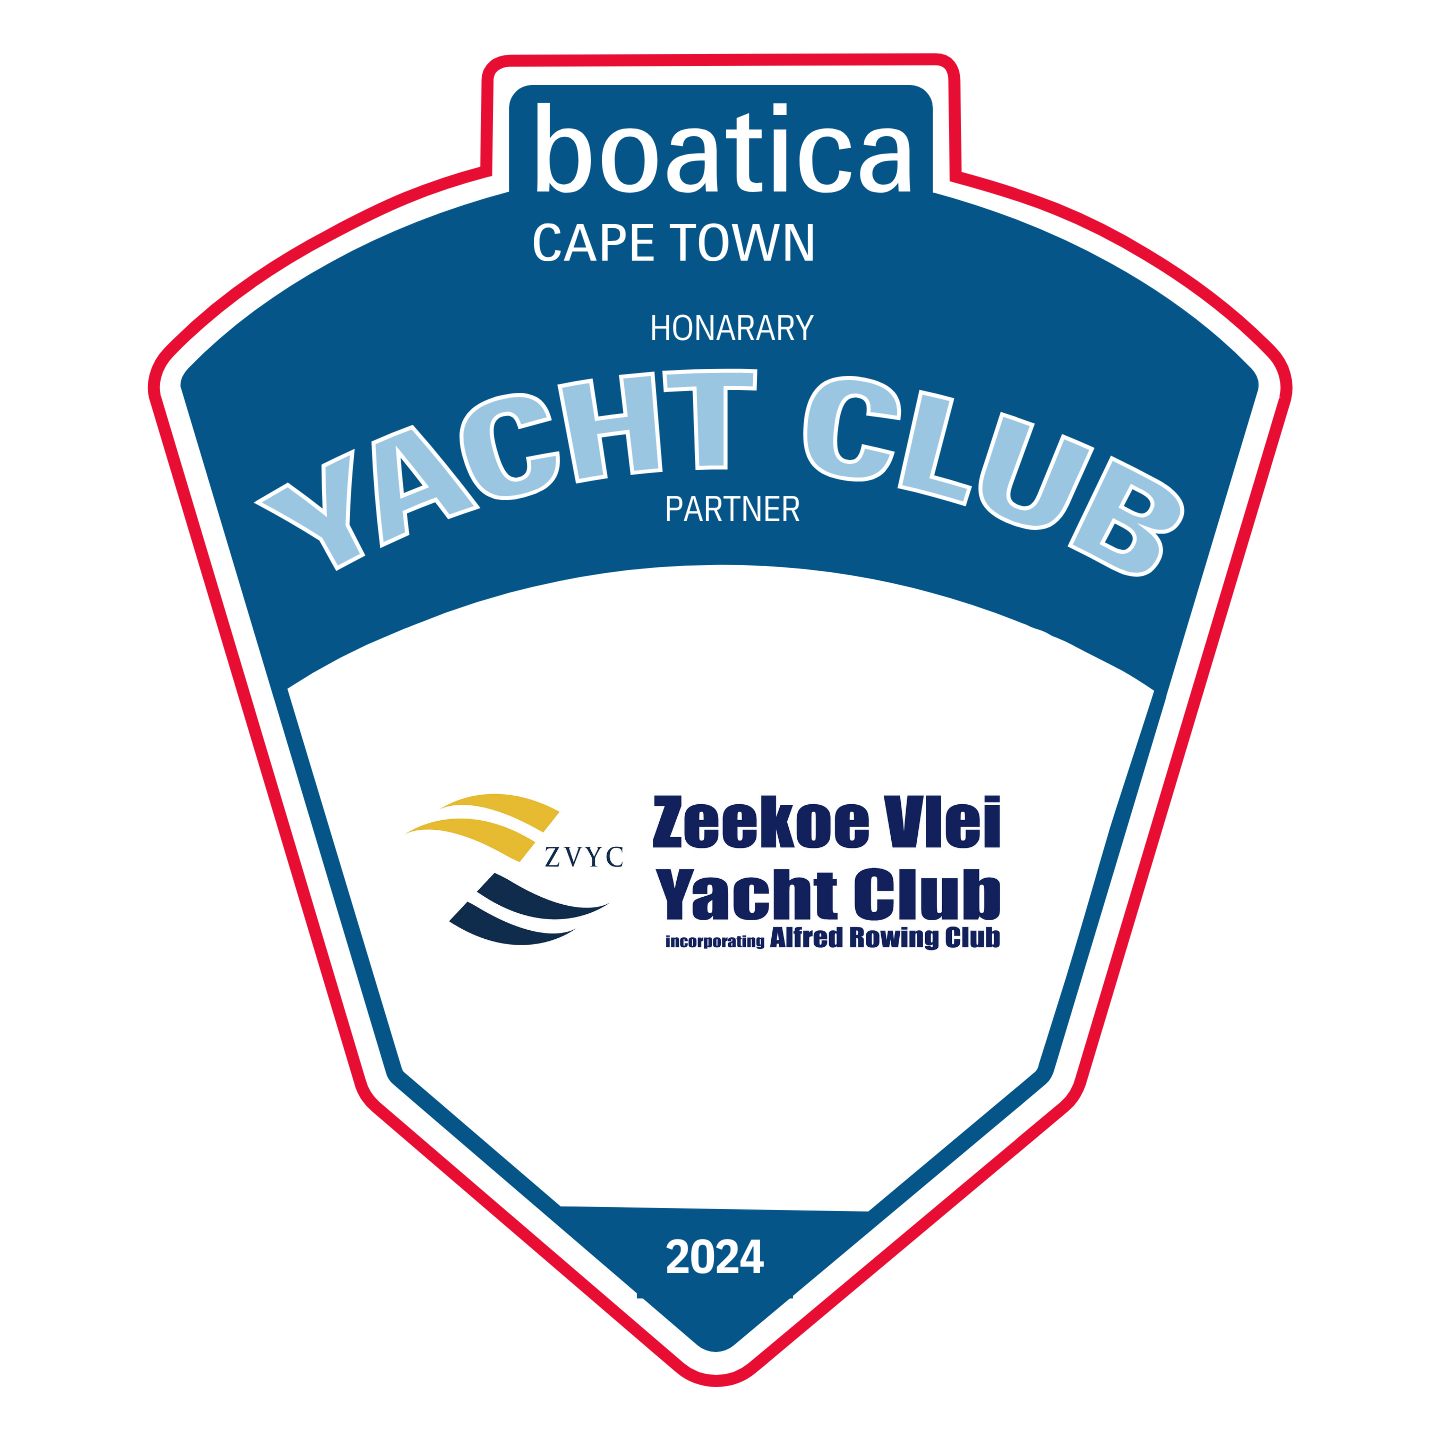 Boatica honorary yacht club partner logo.ai - 4